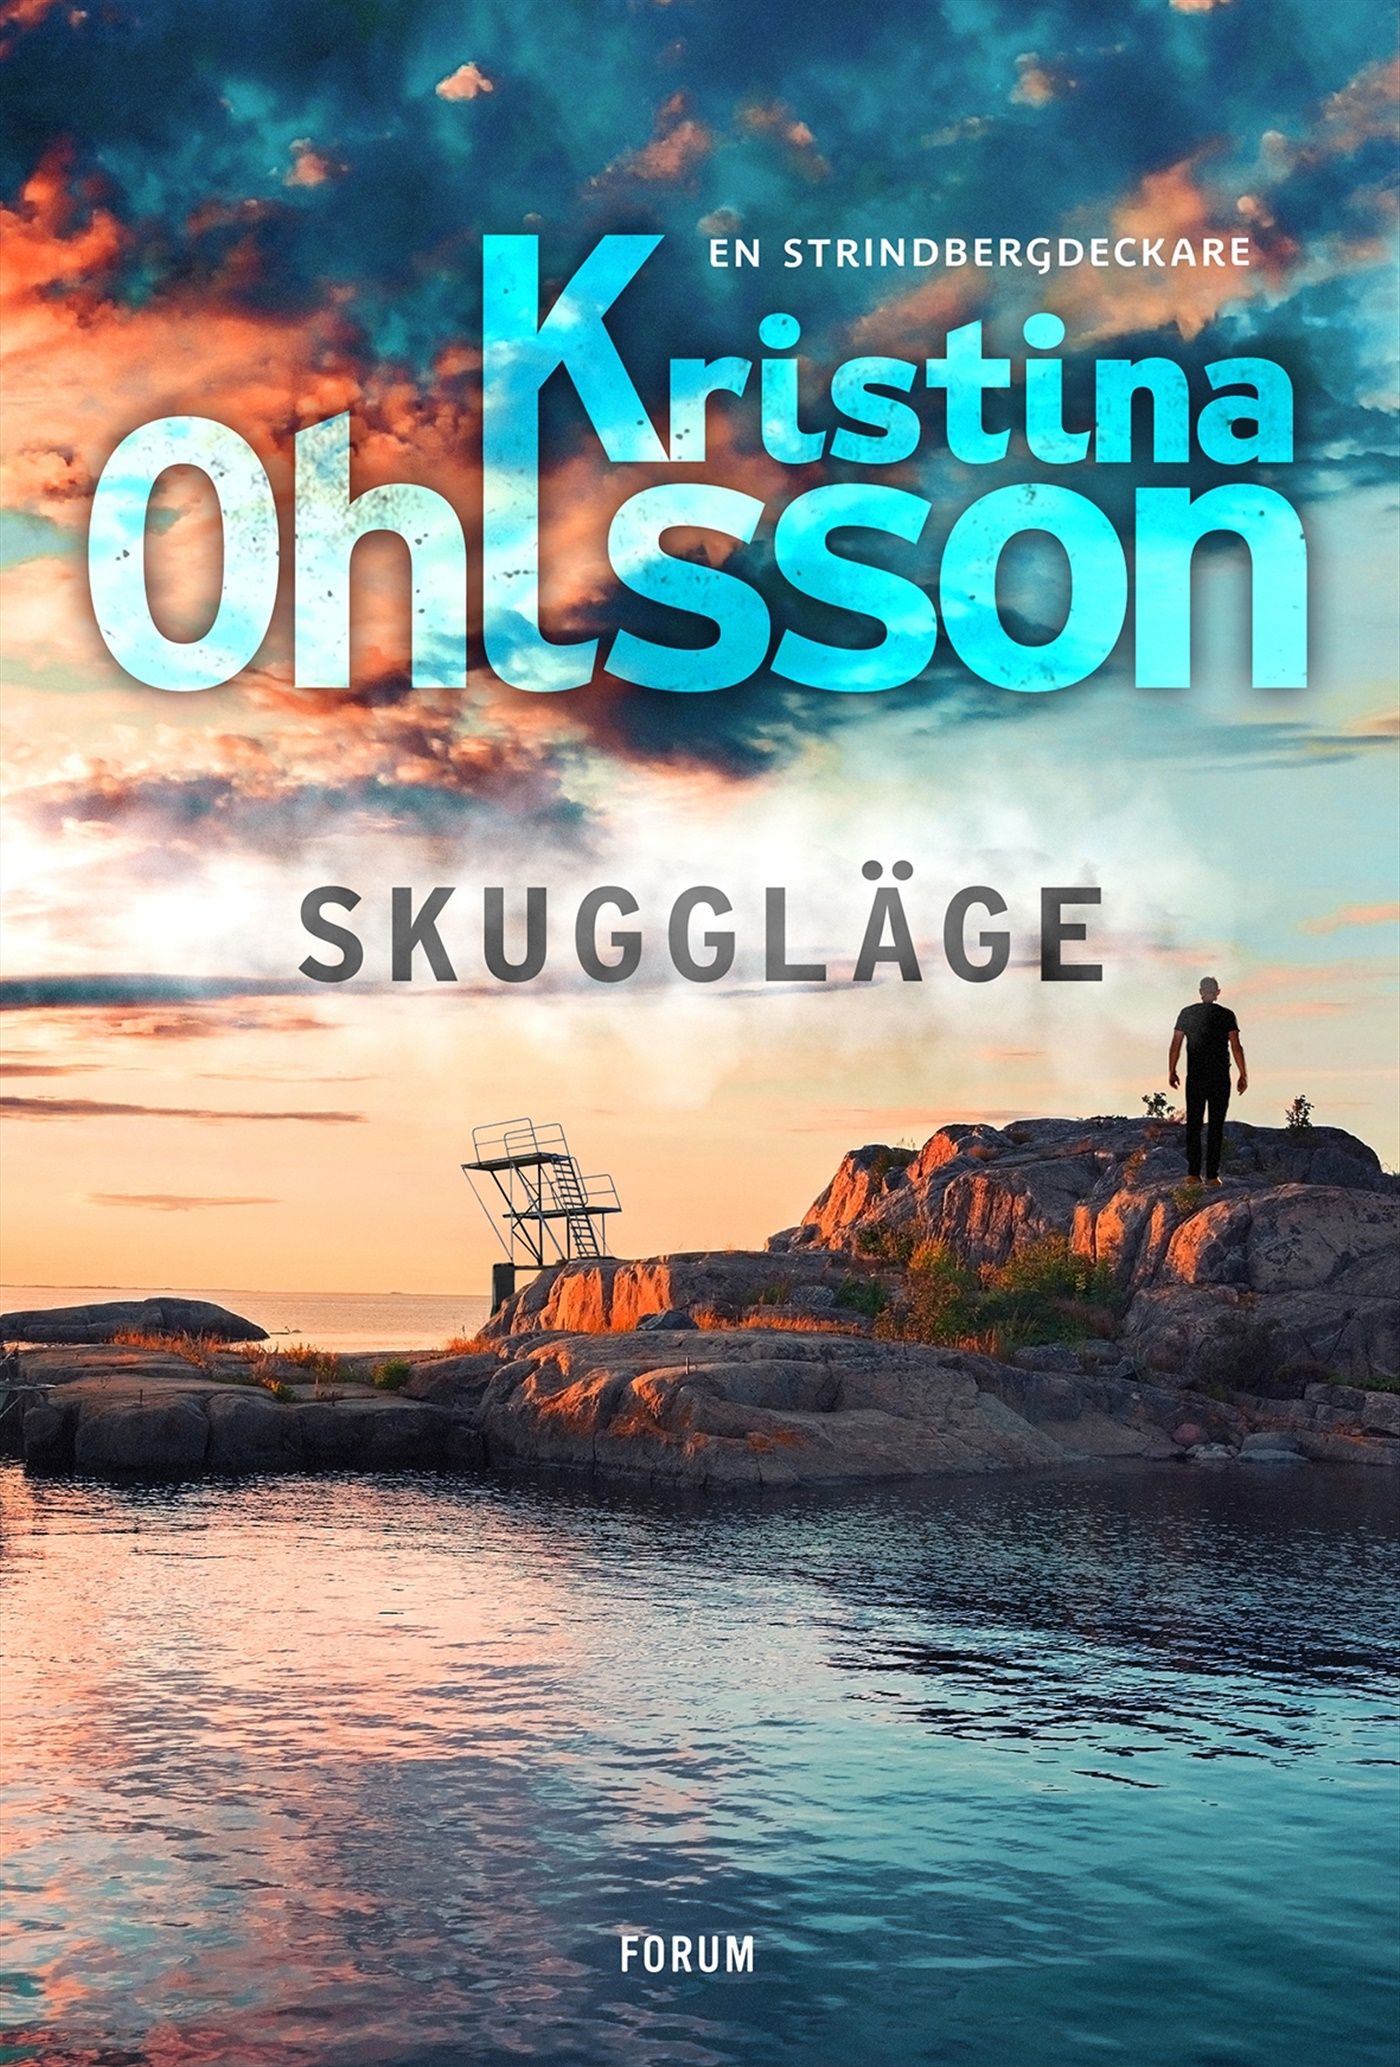 Skuggläge, e-bok av Kristina Ohlsson